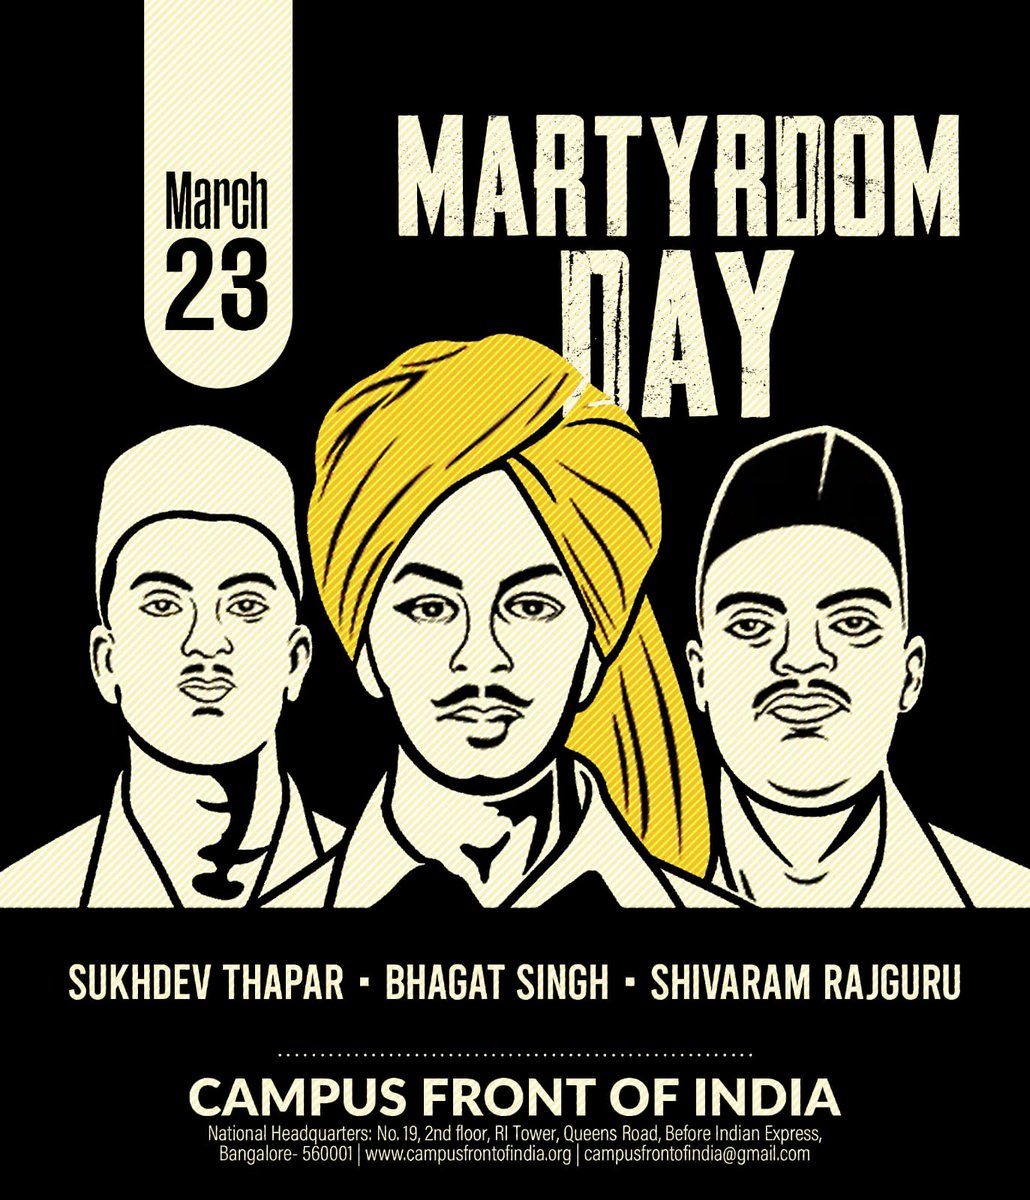 March 23

MARTYRDOM DAY
#BhagatSingh #SukhdevThapar #ShivaramRajguru